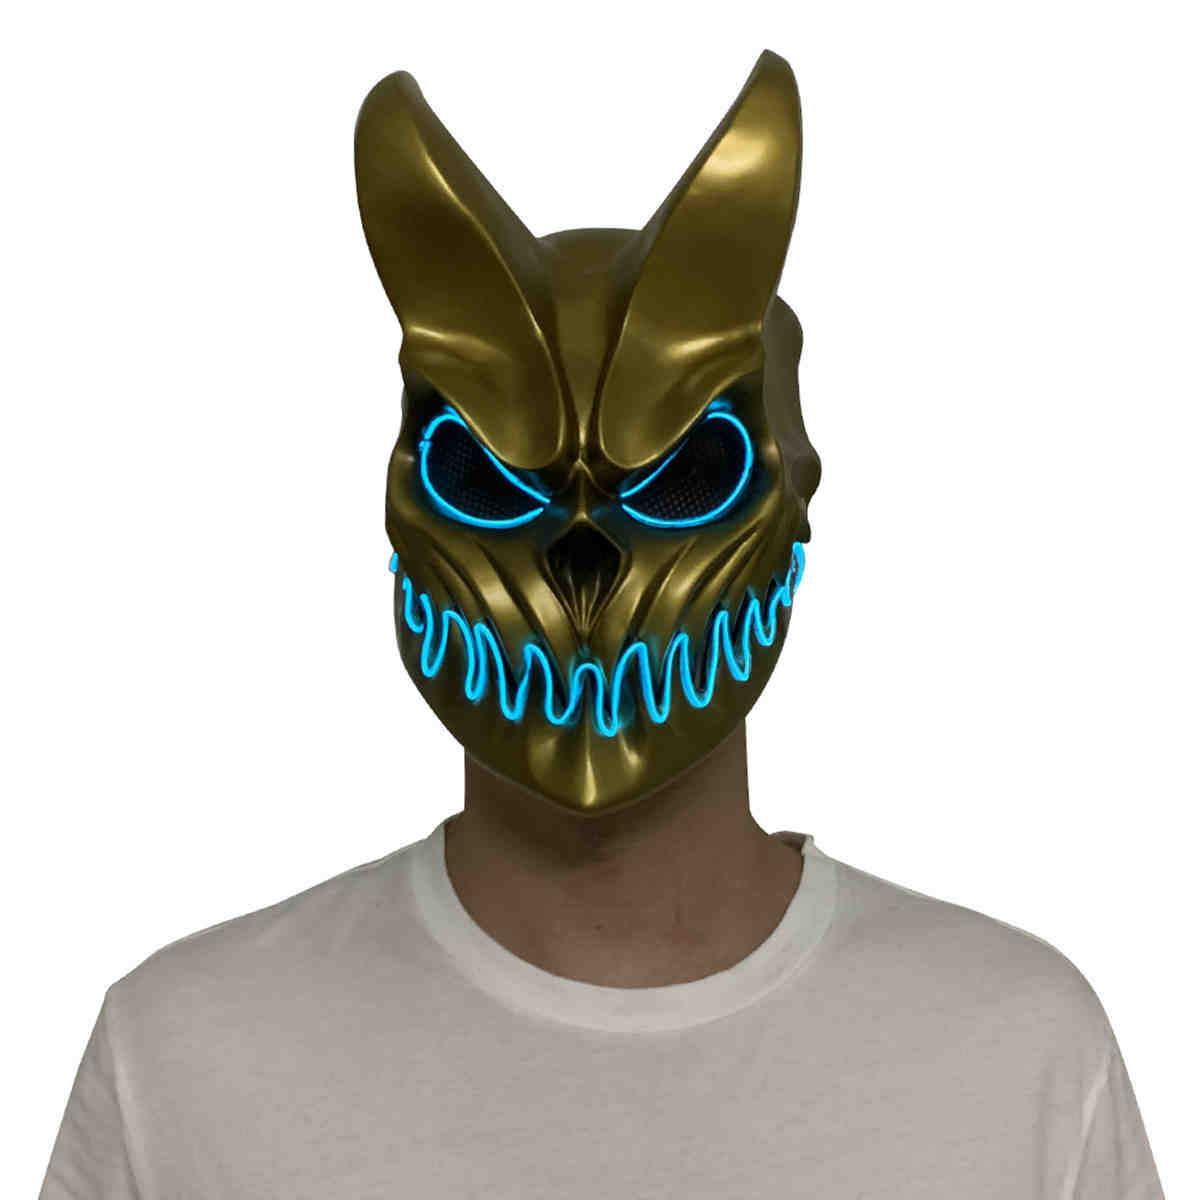 Demon Mask Slaughter To Prevail Mask Kid of Darkness Demolisher Mask LED Light Up Halloween Scary mask-T